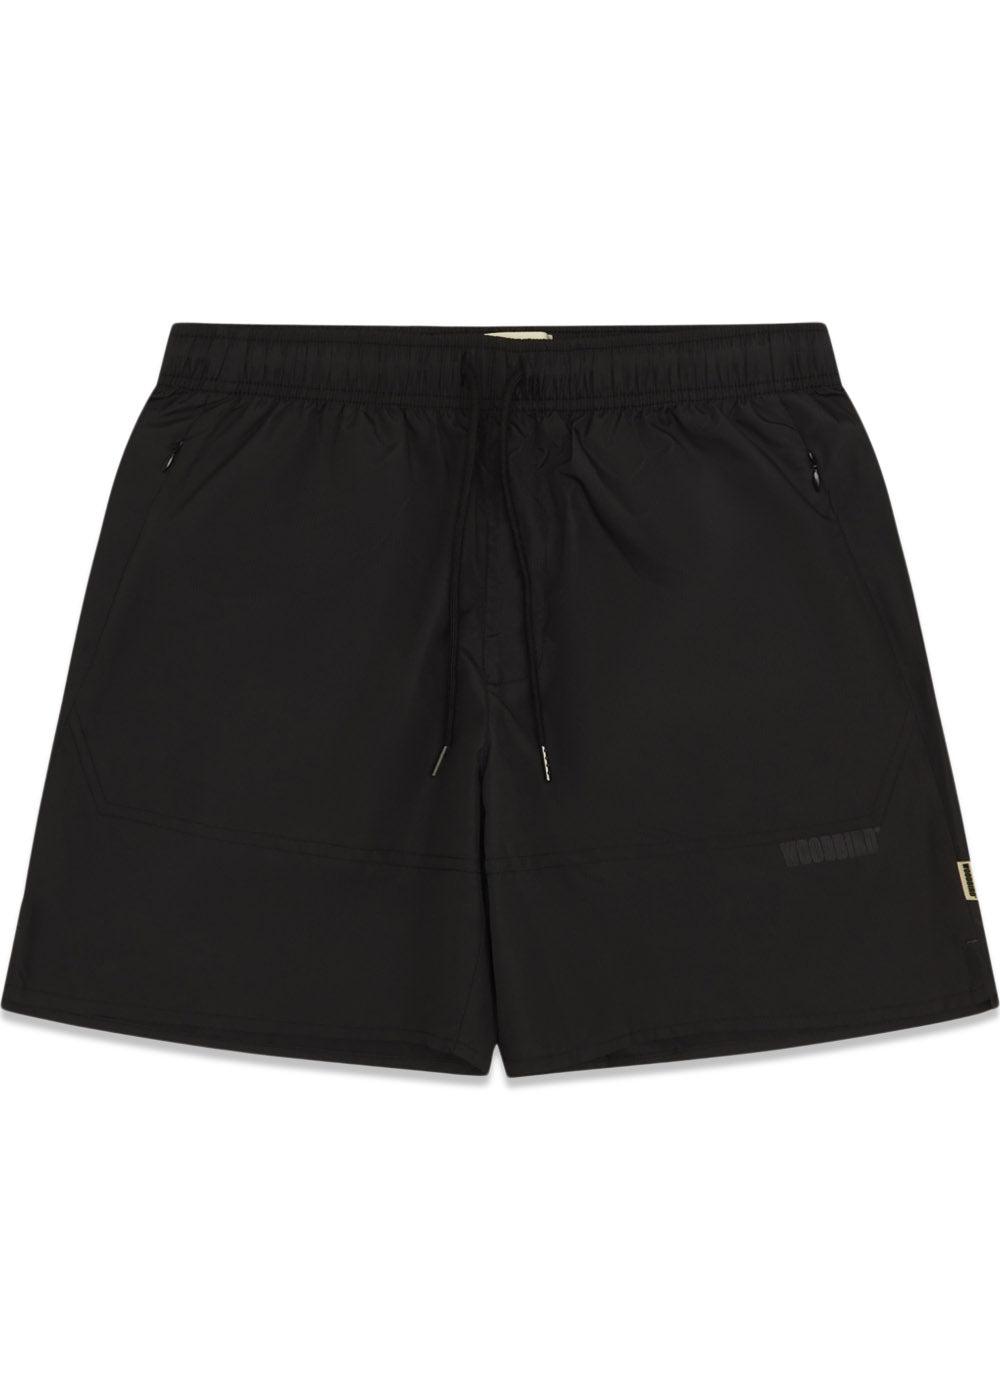 Haiden Tech Shorts - Black